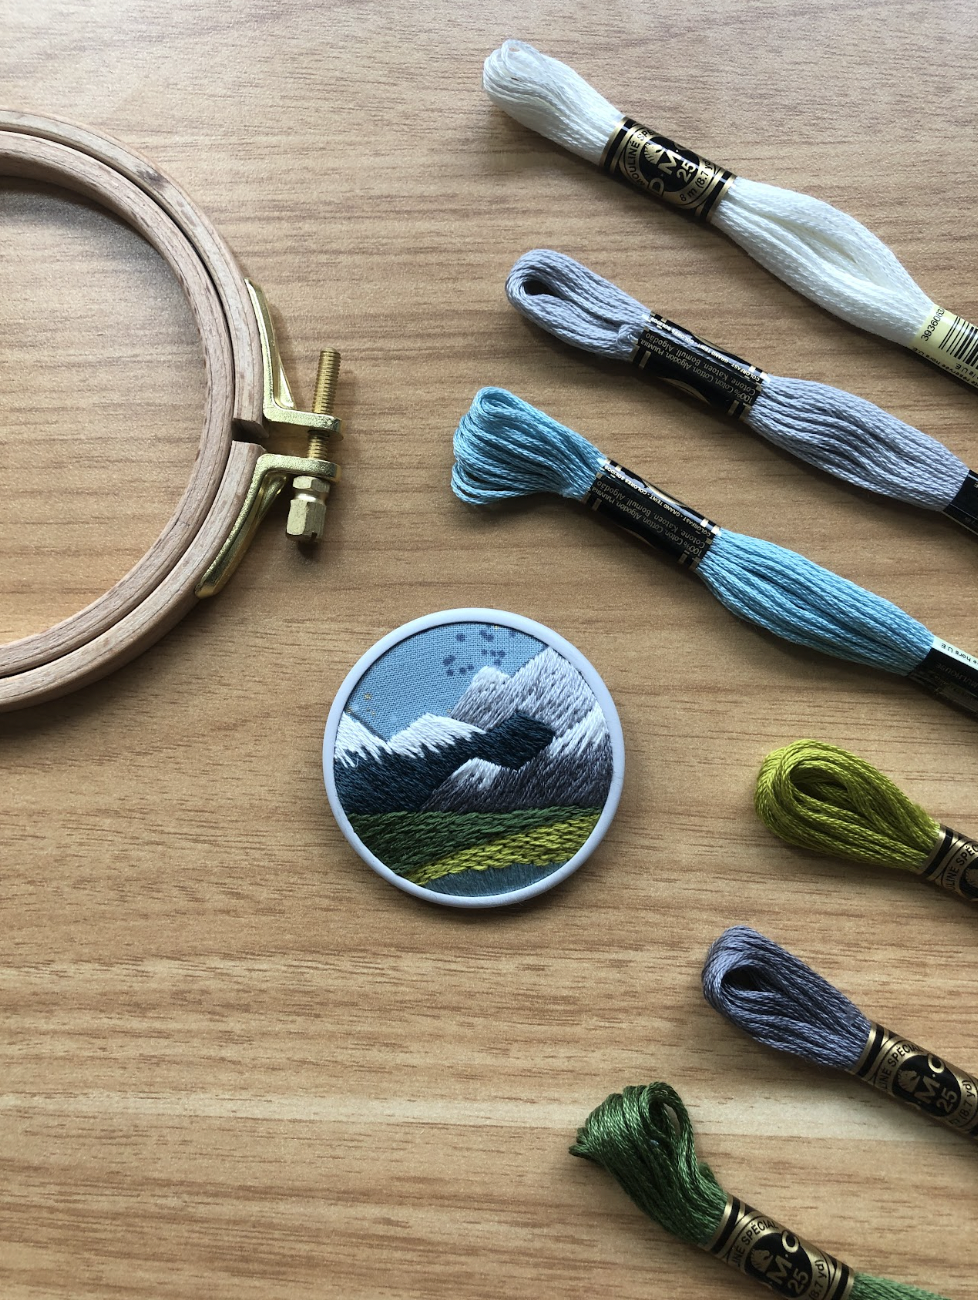 EMBROIDERY CLASS: Stitch A Pacific Northwest Mountain Landscape Pendant